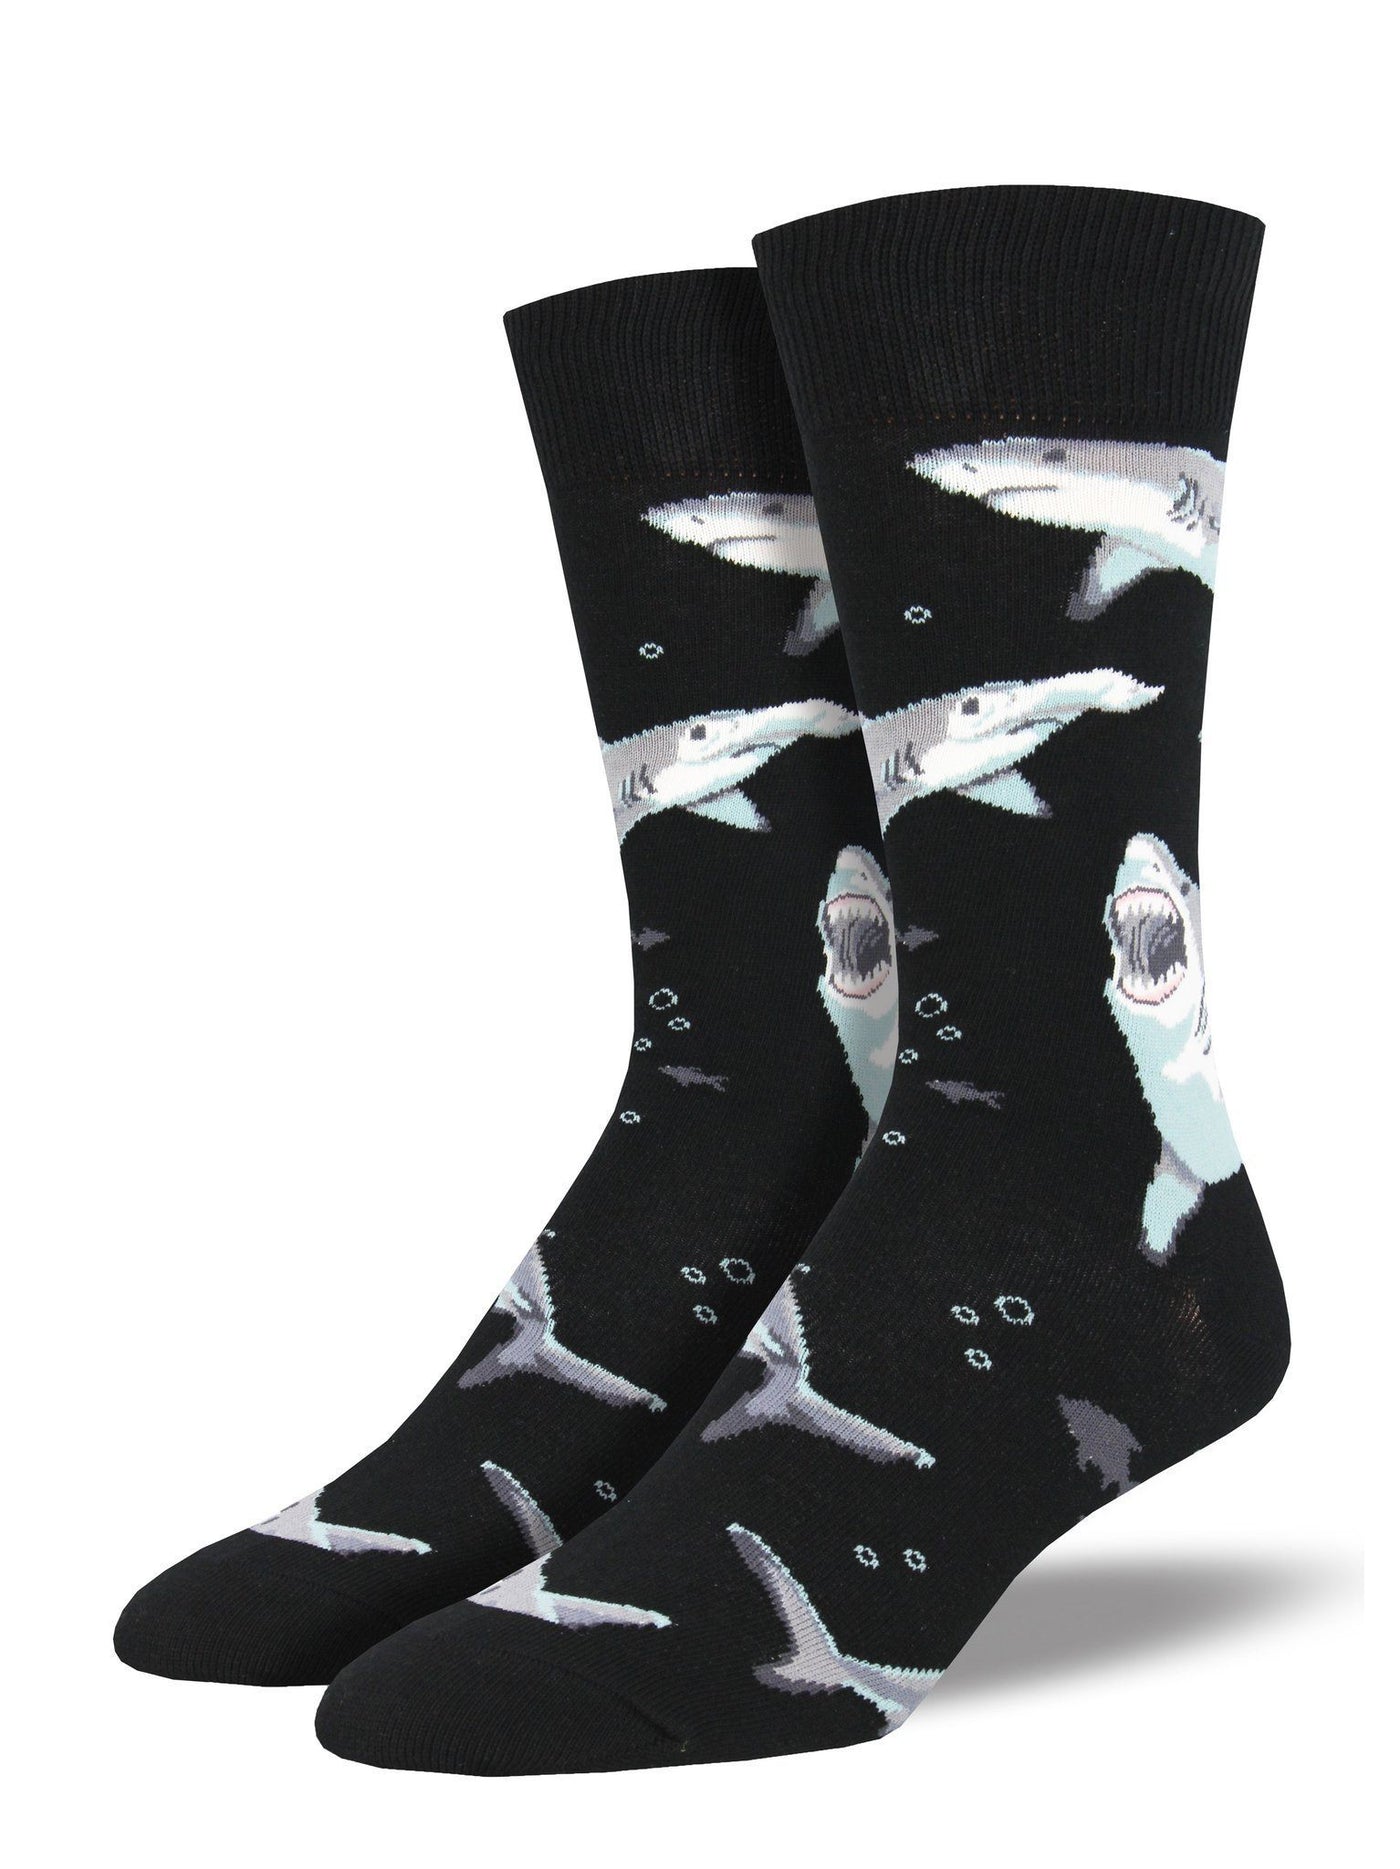 Socksmith - Shark Chums Crew Socks | Men's - Knock Your Socks Off